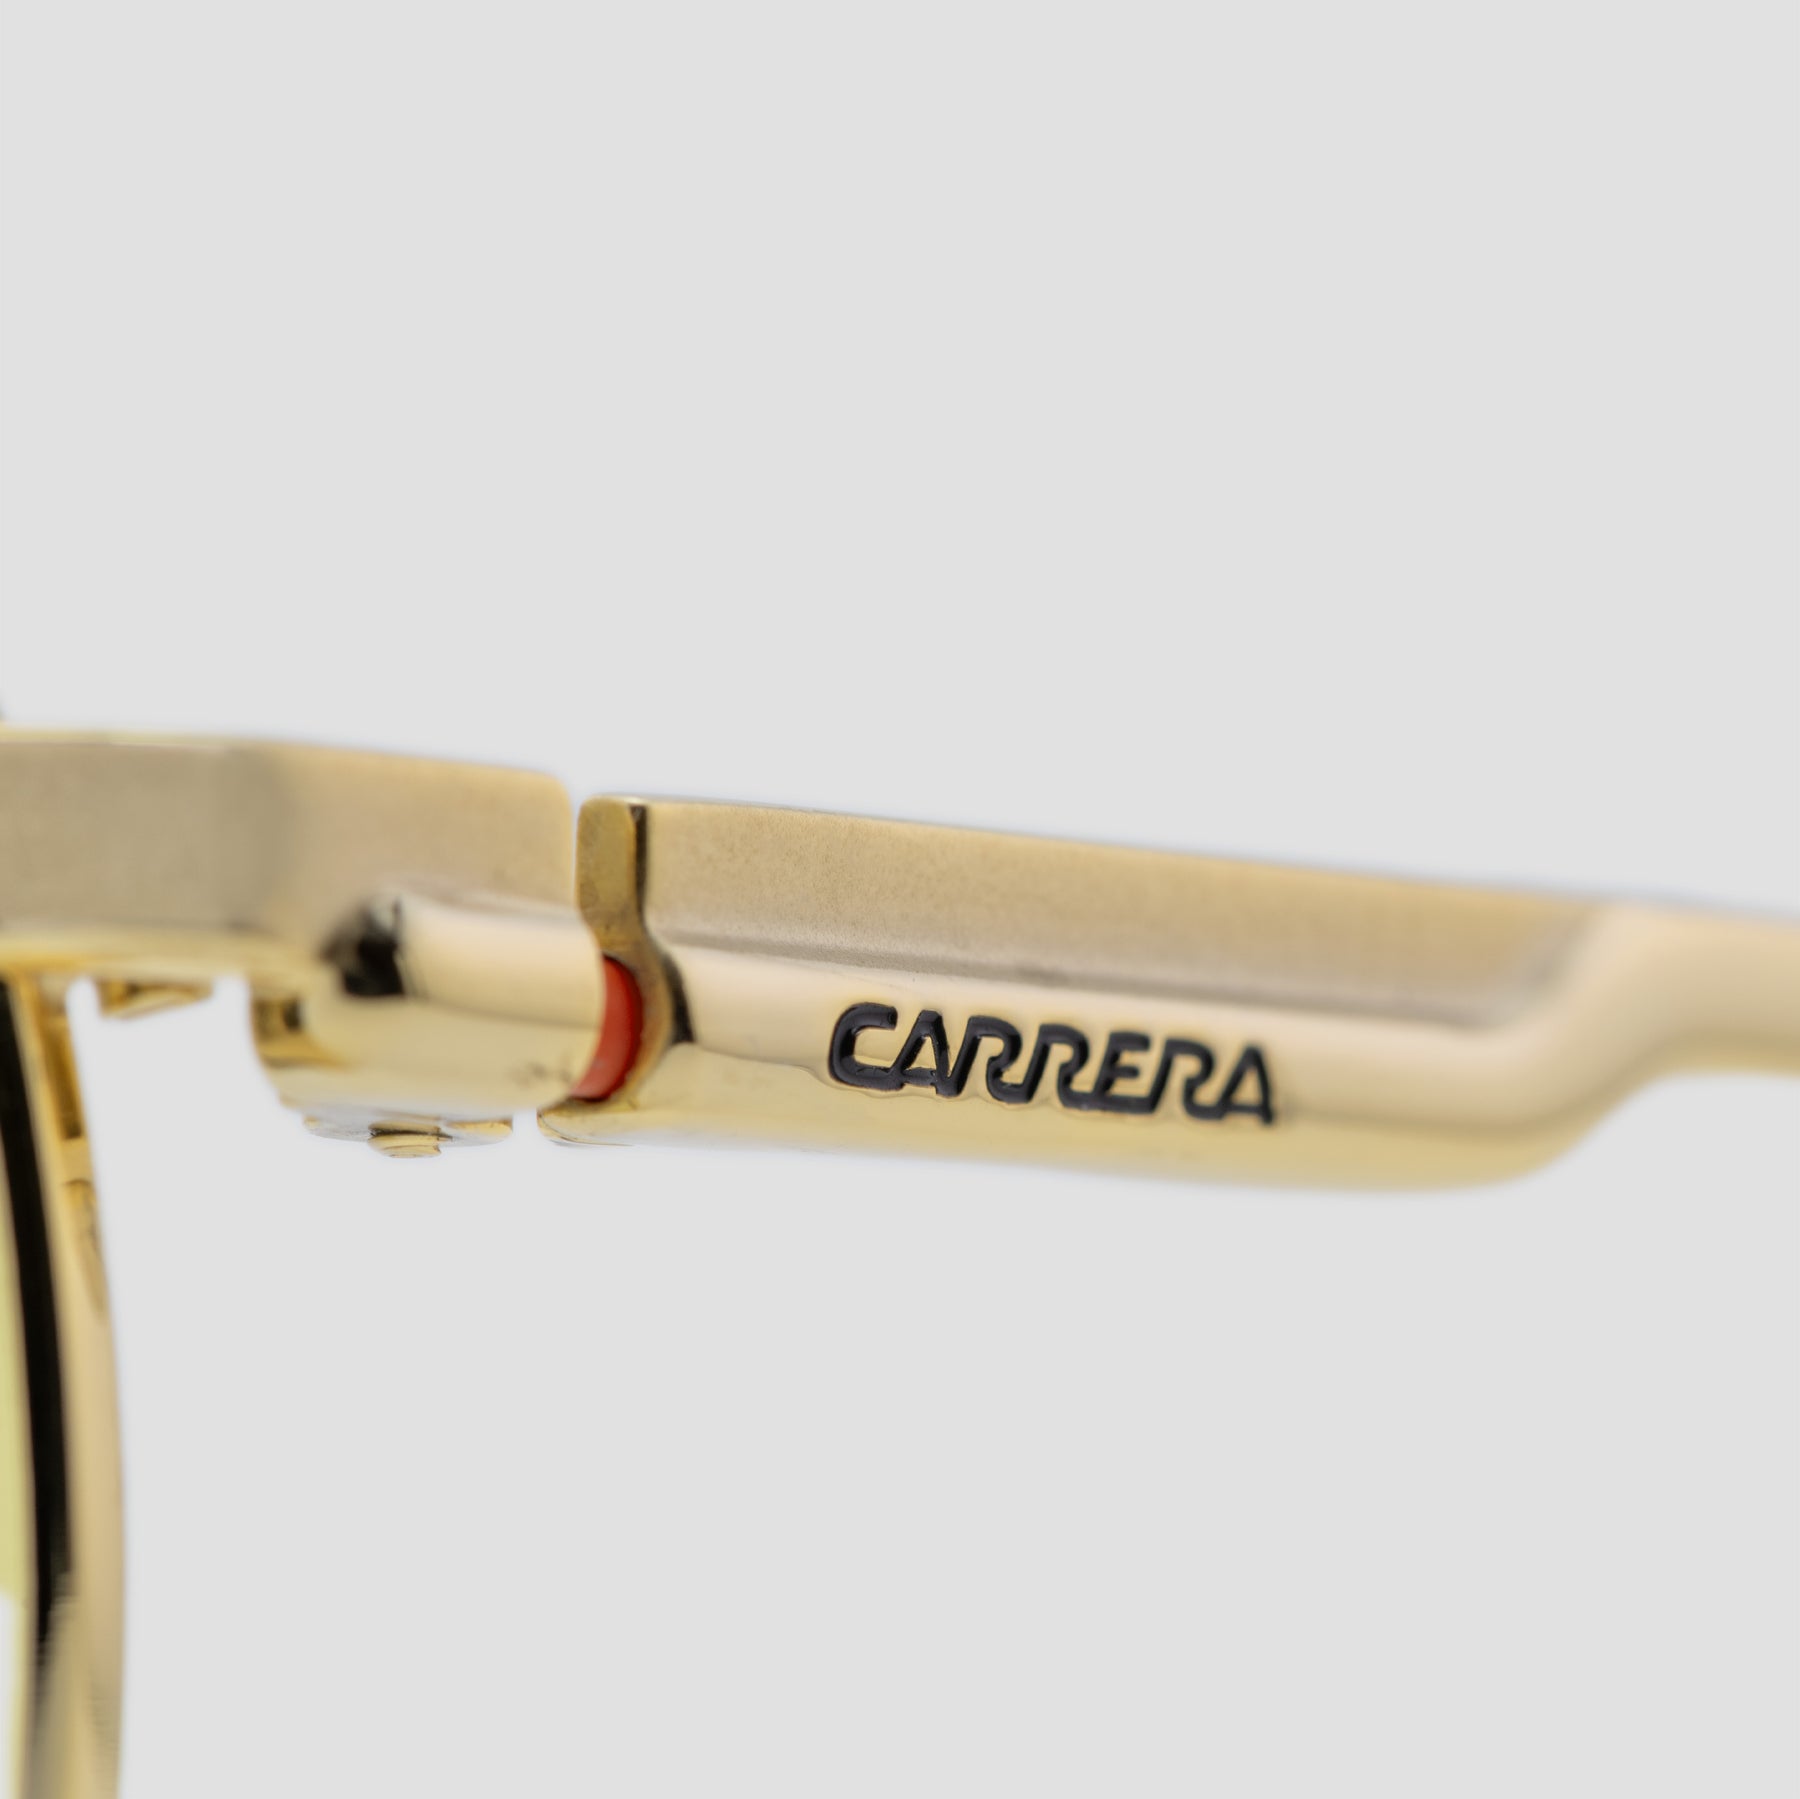 Vintage Carrera Boeing Re-make Sunglasses circa 2000's